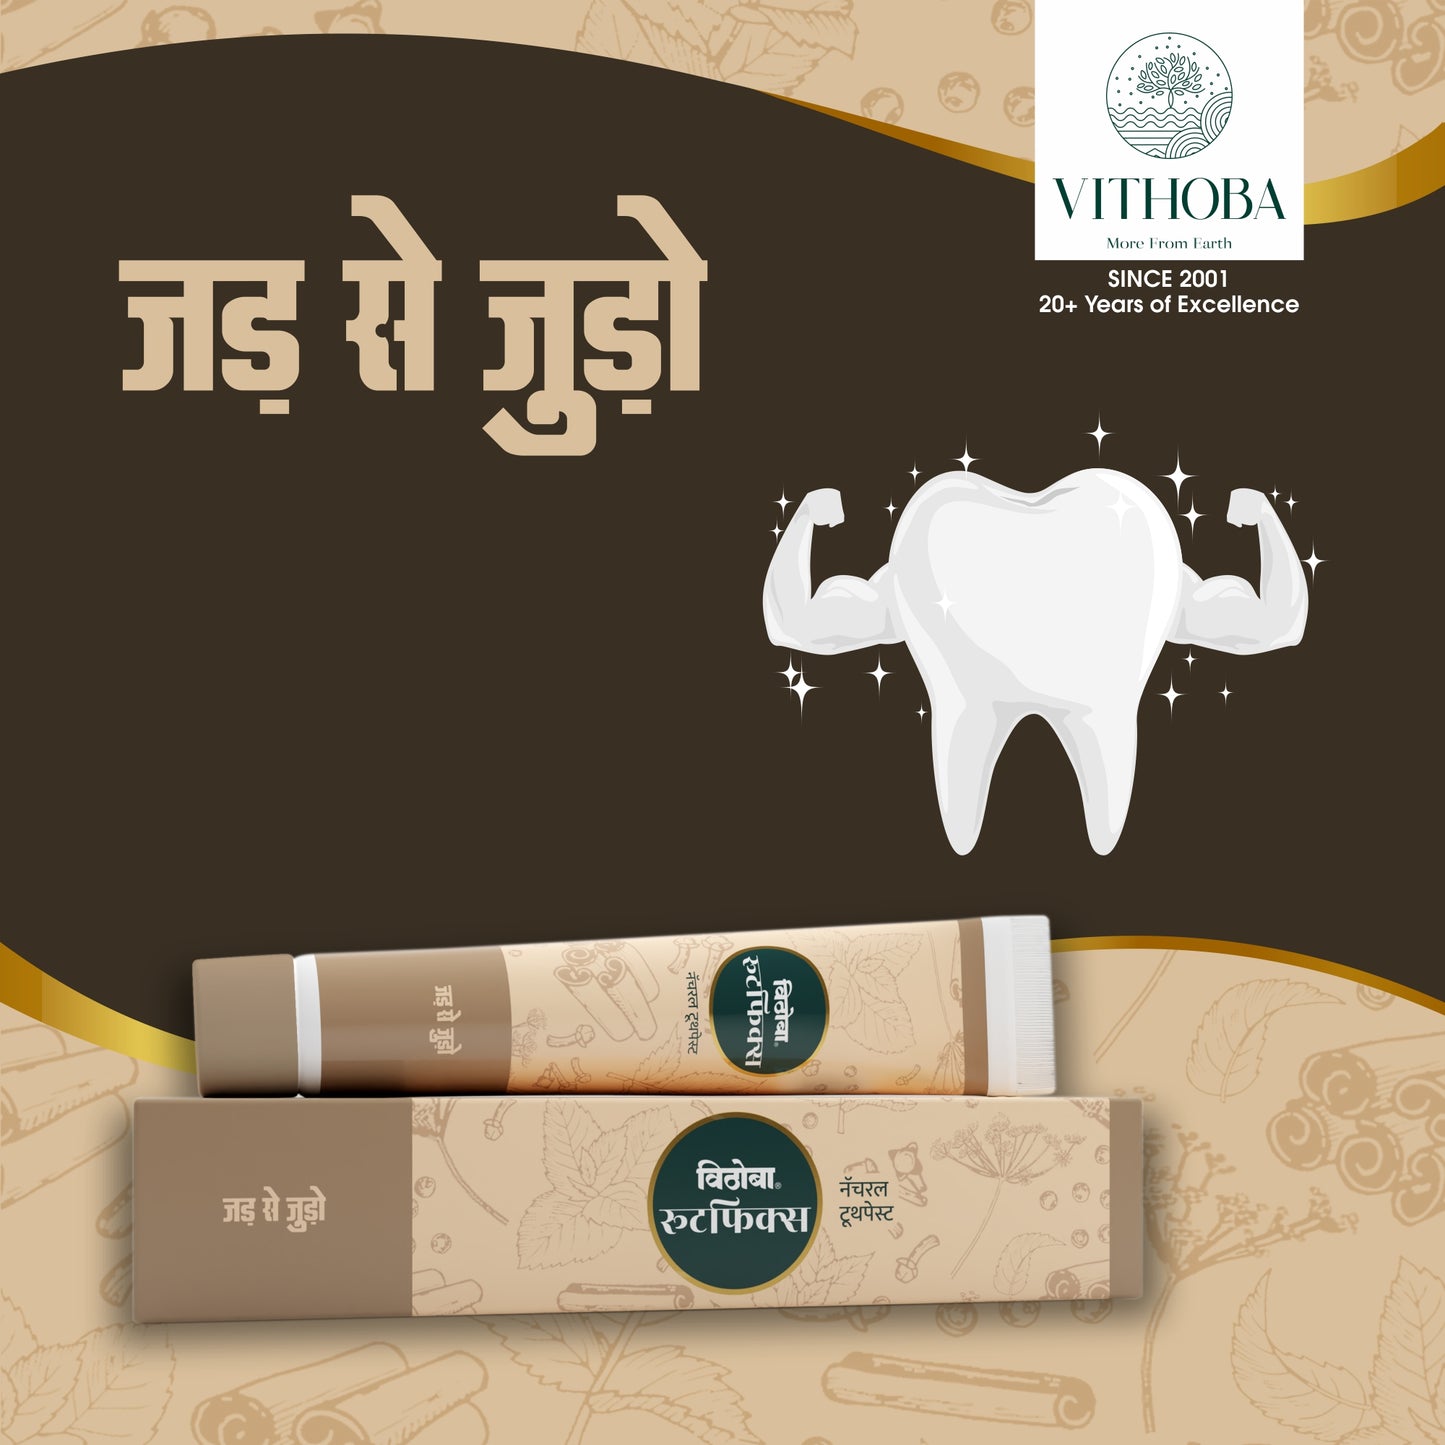 Vithoba Herbal Rootfix Toothpaste & Vithoba Premium Toothpaste Combo Pack - 40g